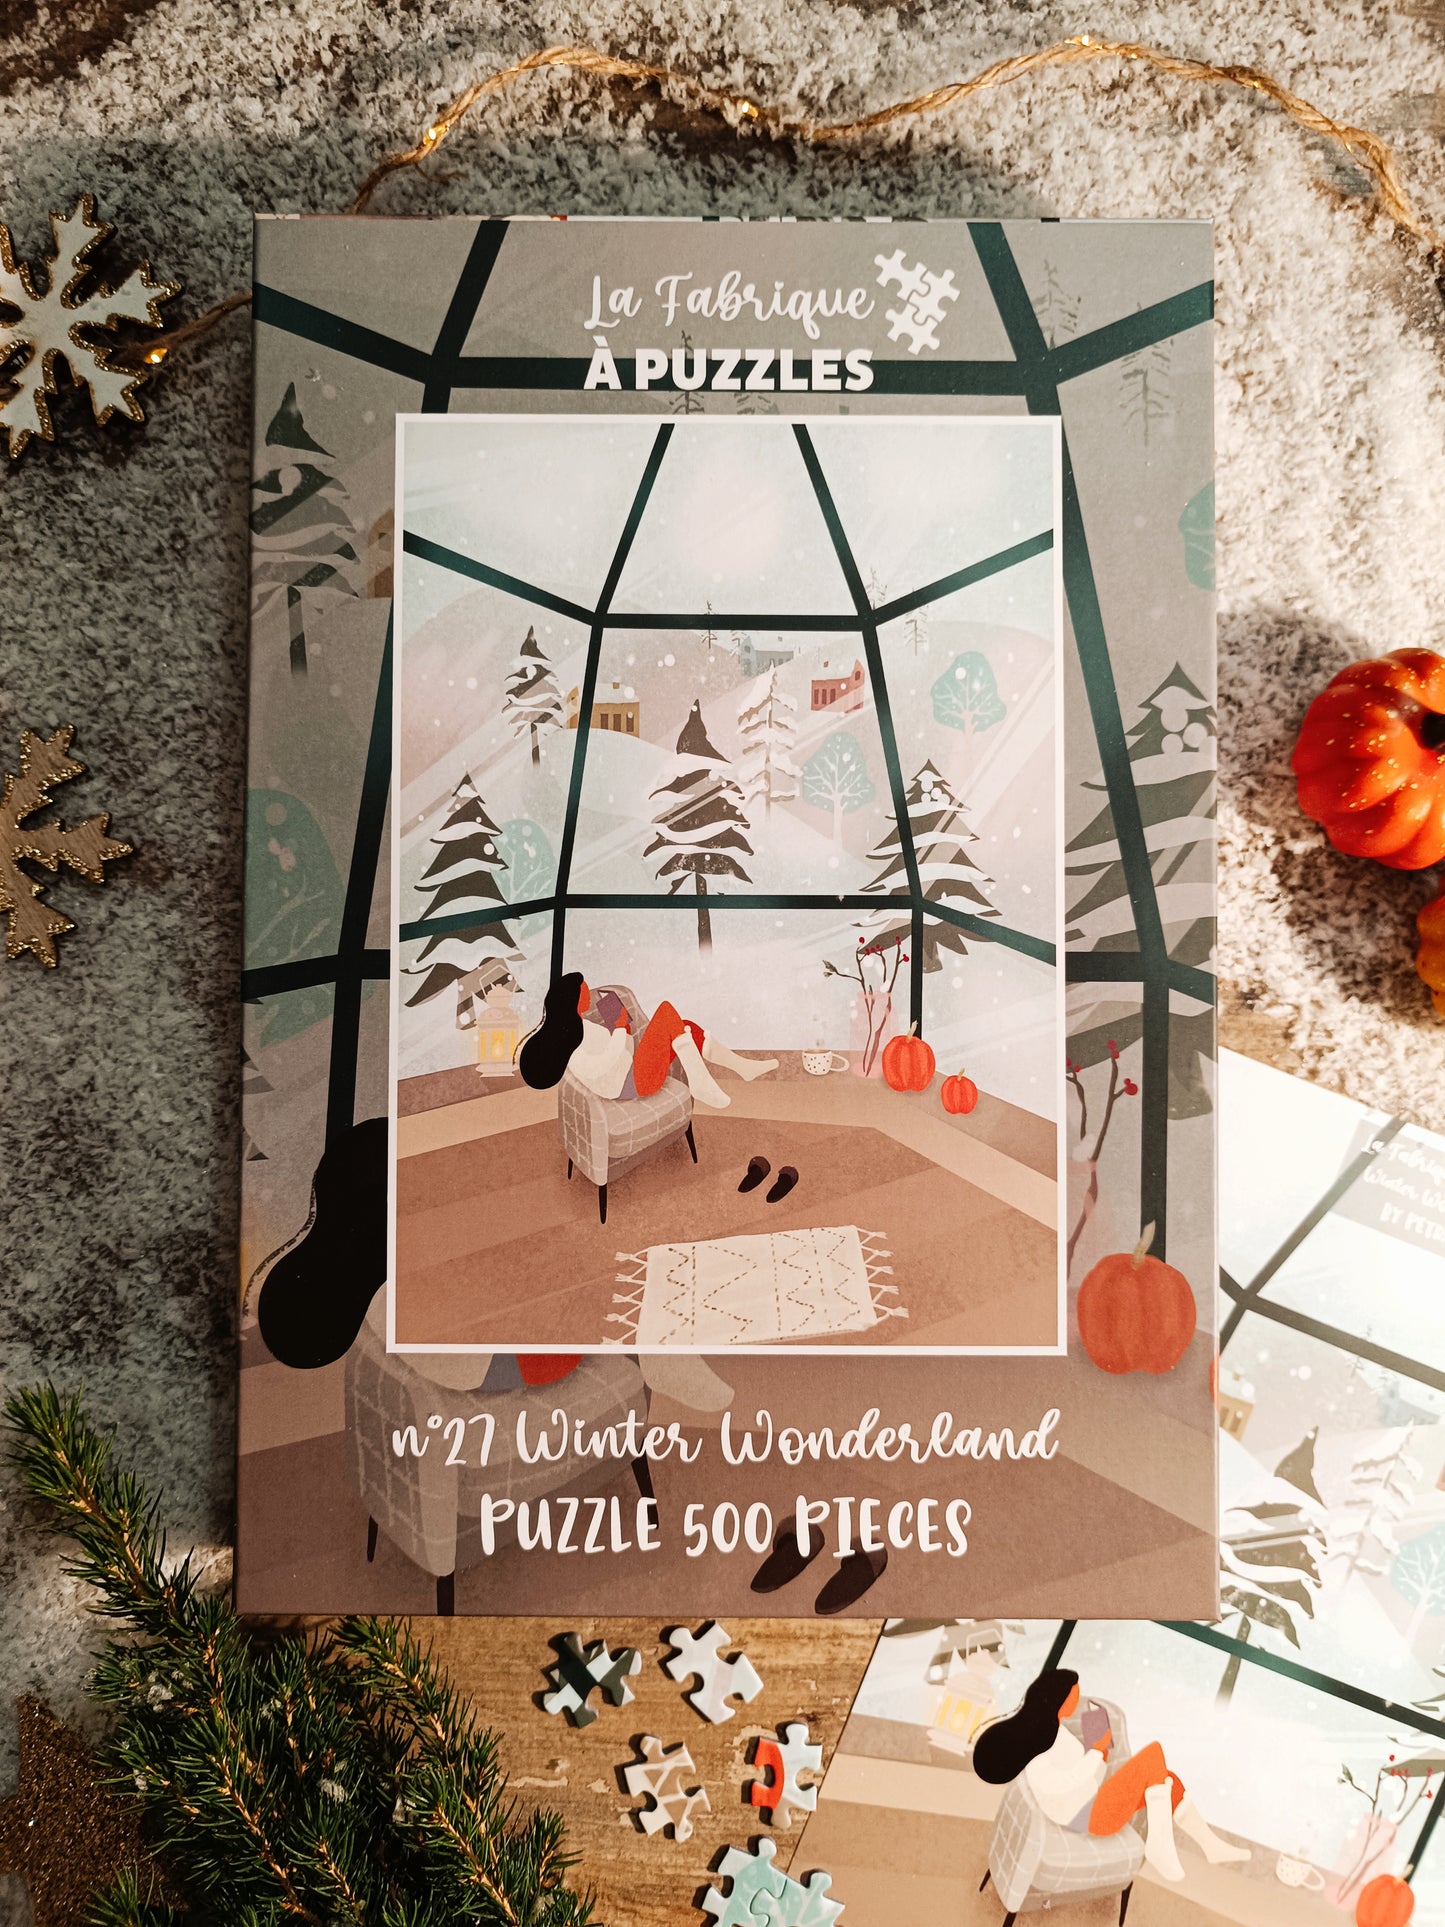 Puzzle n°27 "Winter Wonderland" 500 pieces by Petr Arts